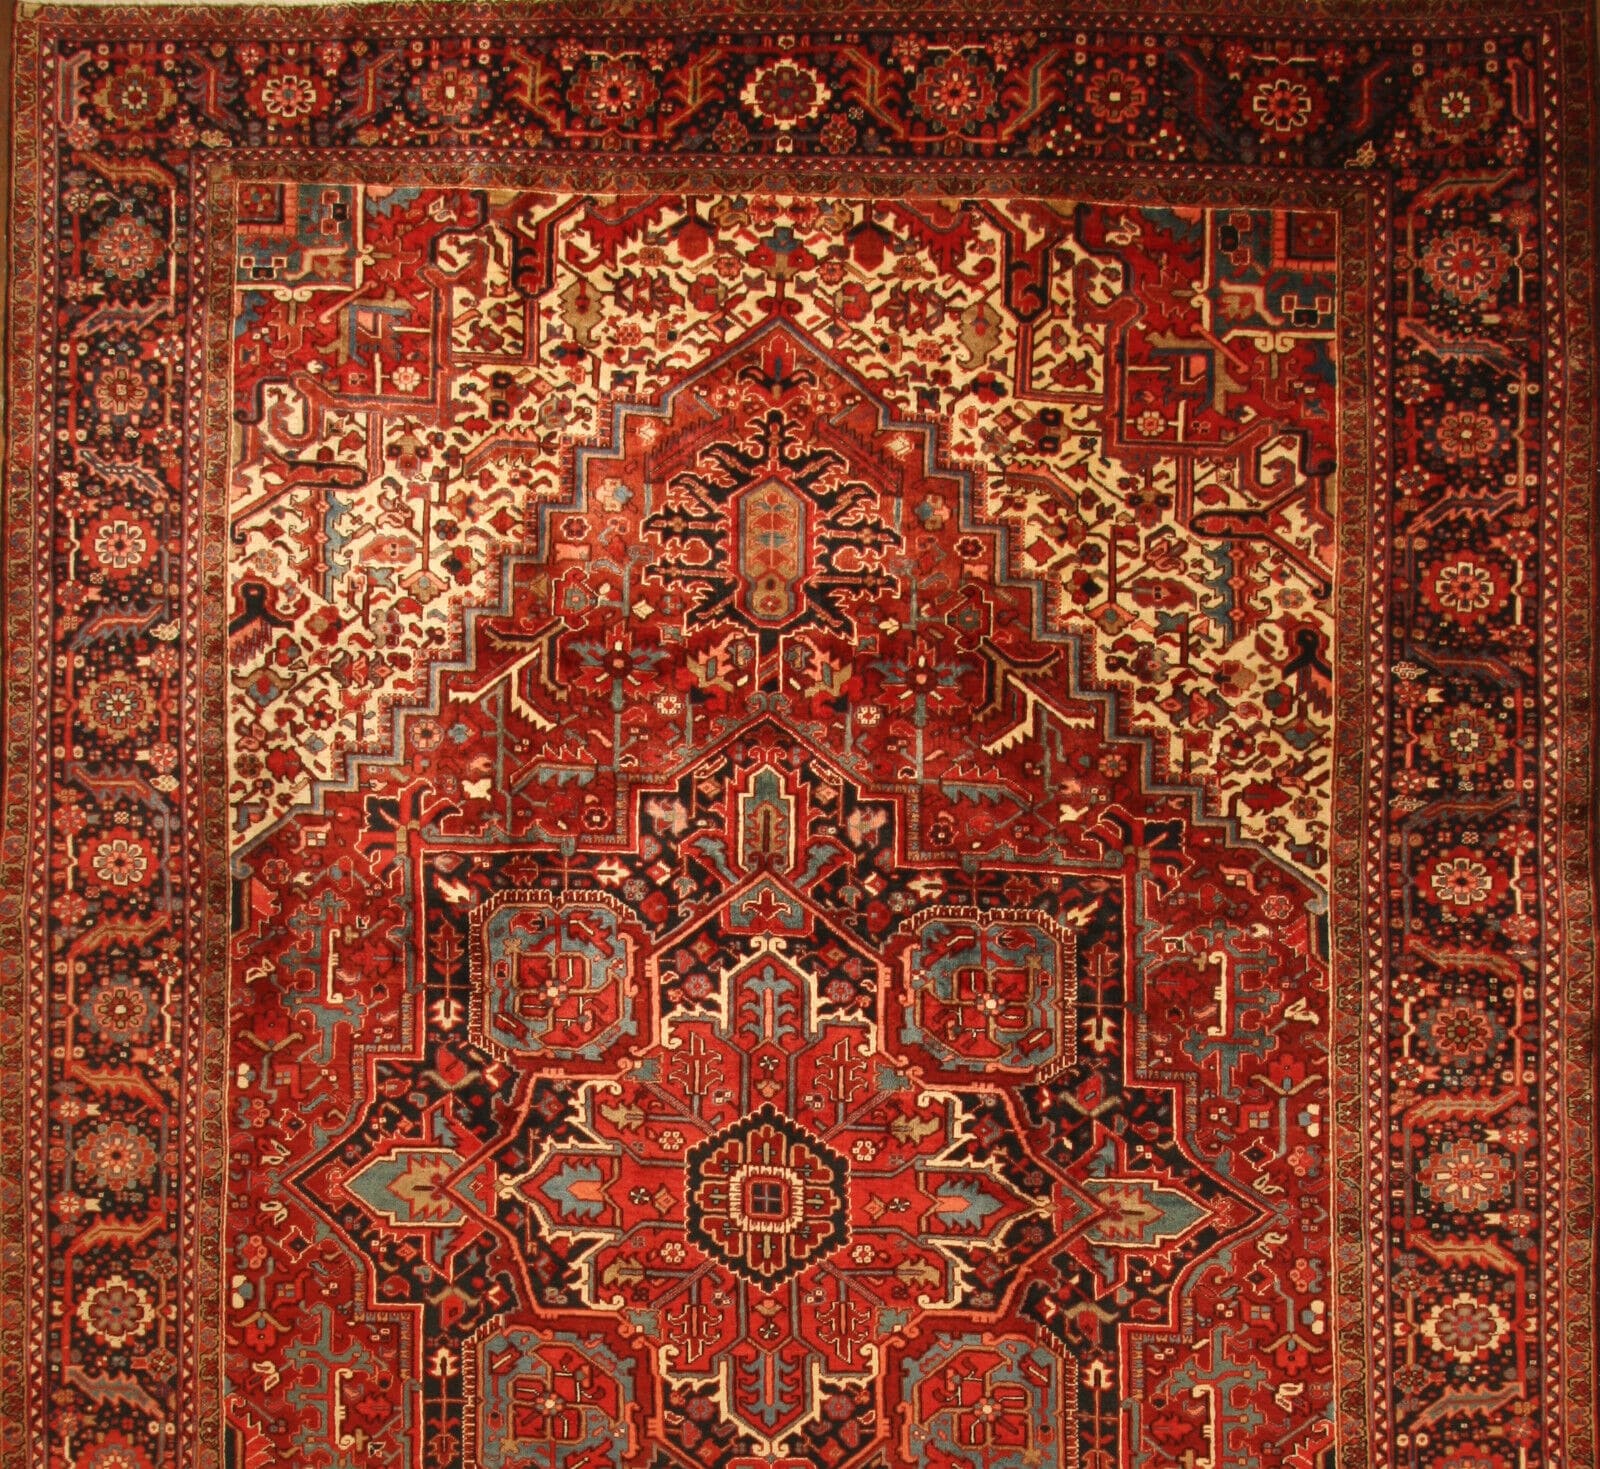 Side view of the Handmade Vintage Persian Style Heriz Rug demonstrating texture